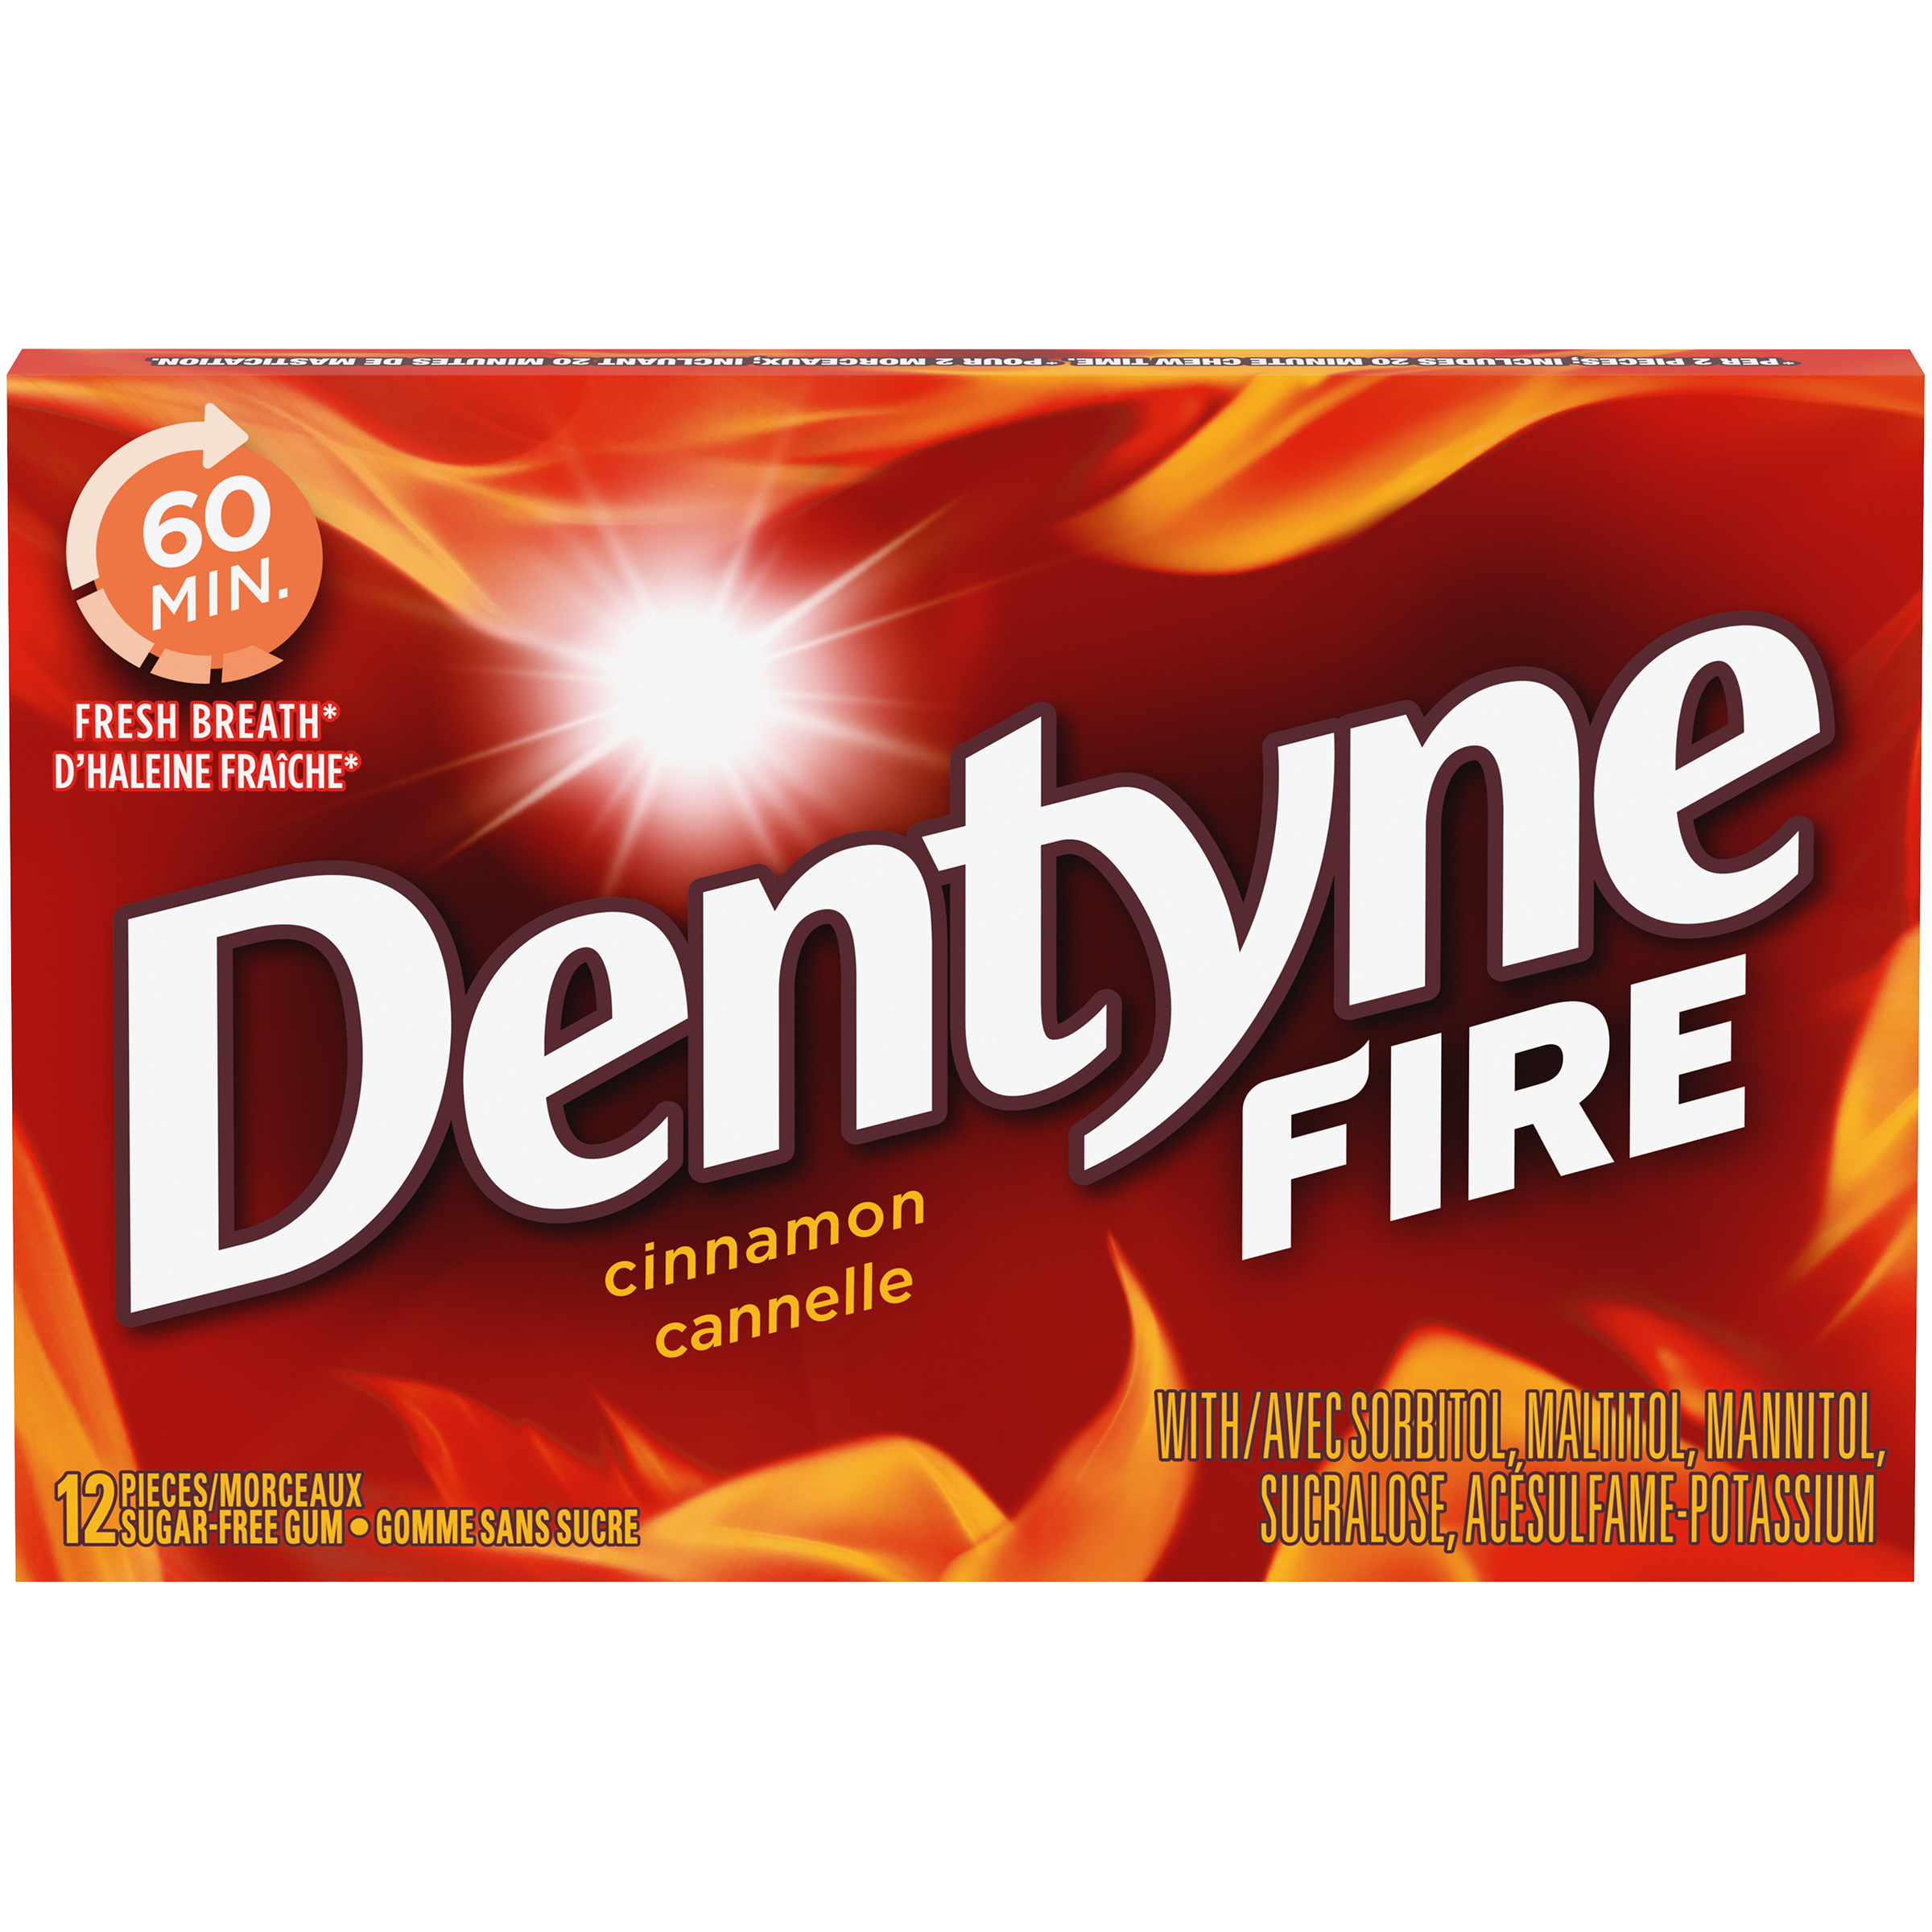 Dentyne Fire Cinnamon Gum 12 Count